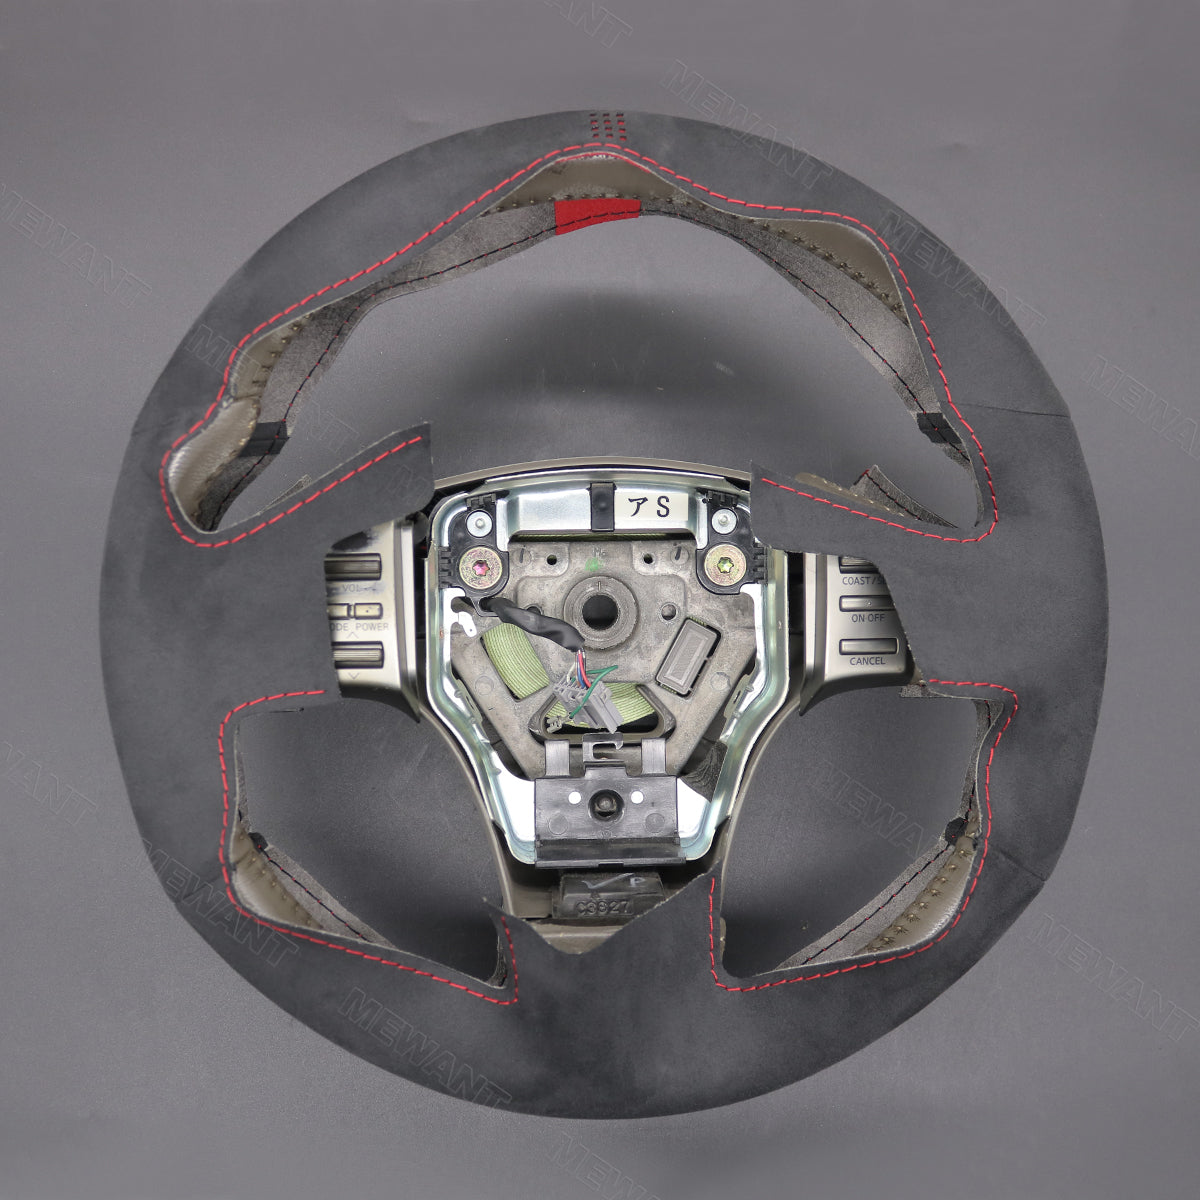 MEWANT Carbon Fiber Suede Car Steering Wheel Cover for Infiniti G35 2003-2006 / for Nissan Skyline V35 2003-2006